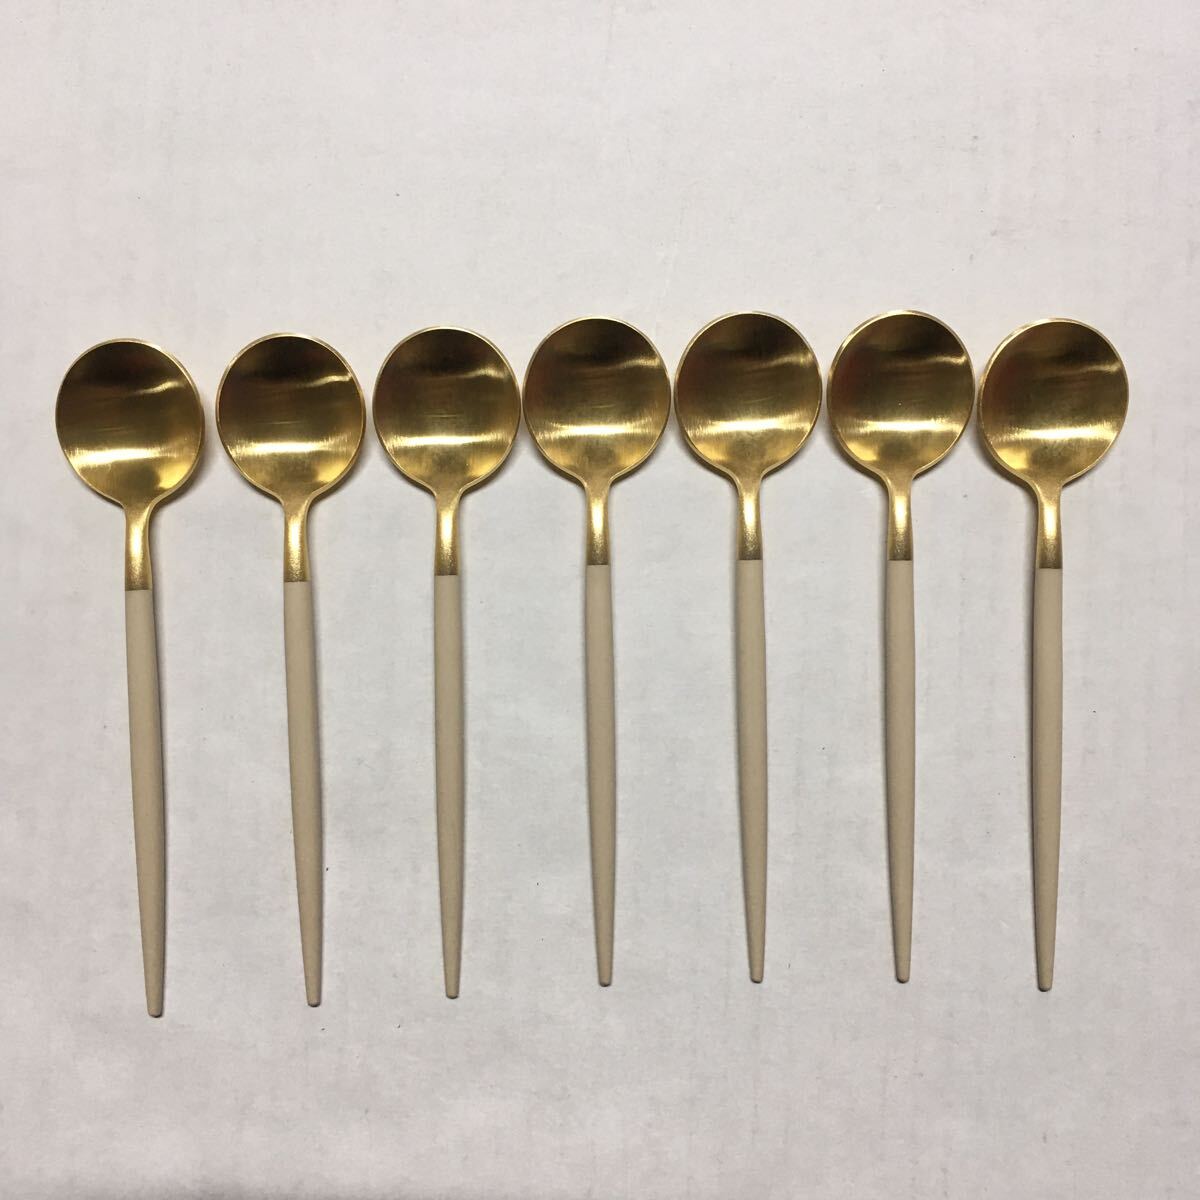 RX475 Cutipolkchi paul (pole) cutlery set goa ivory Gold spoon 7 point summarize kitchen interior unused storage goods tableware 